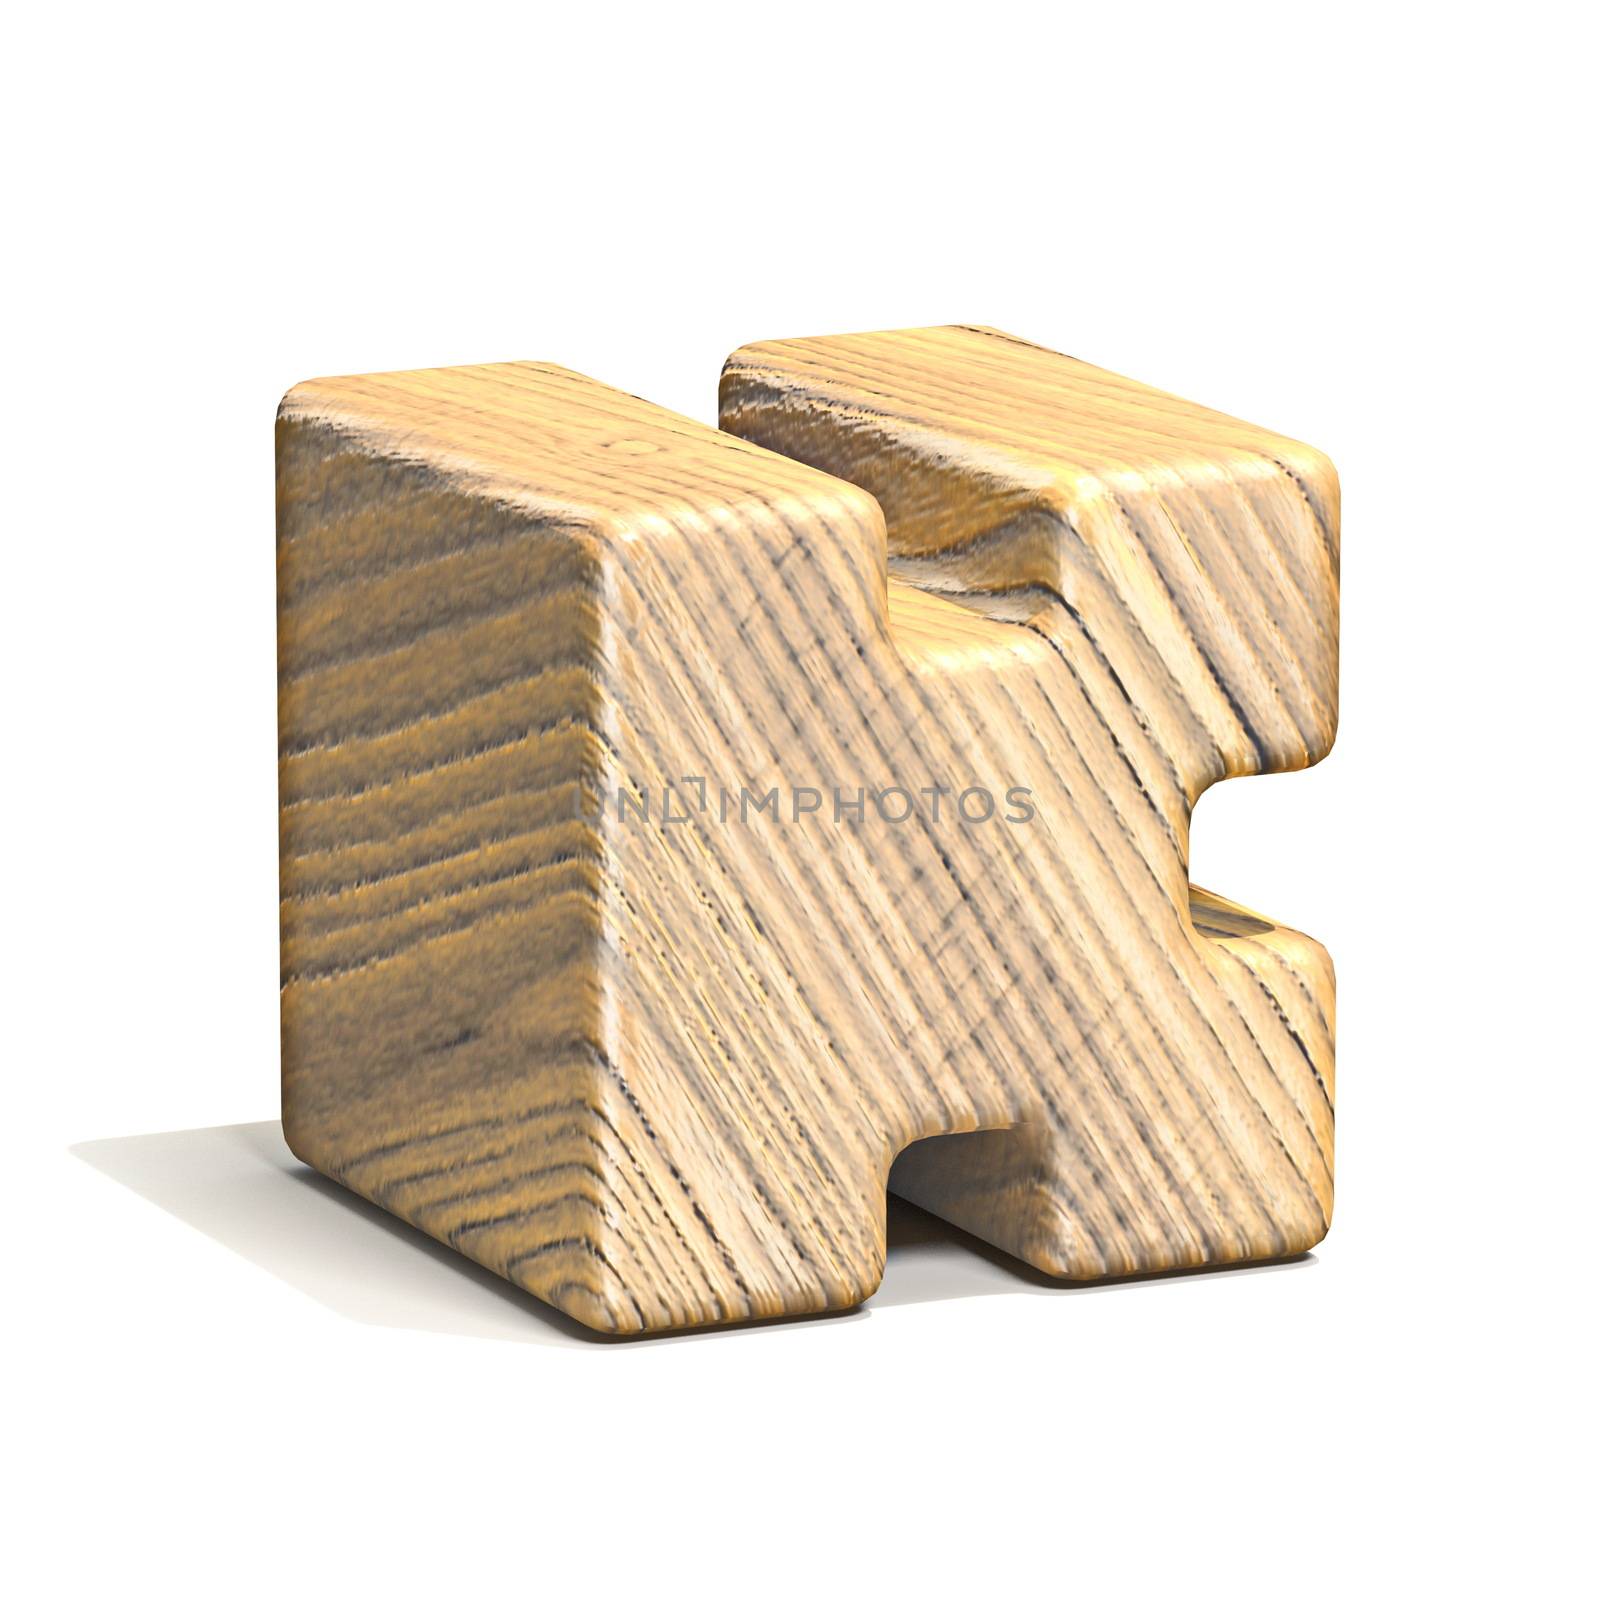 Solid wooden cube font Letter K 3D by djmilic